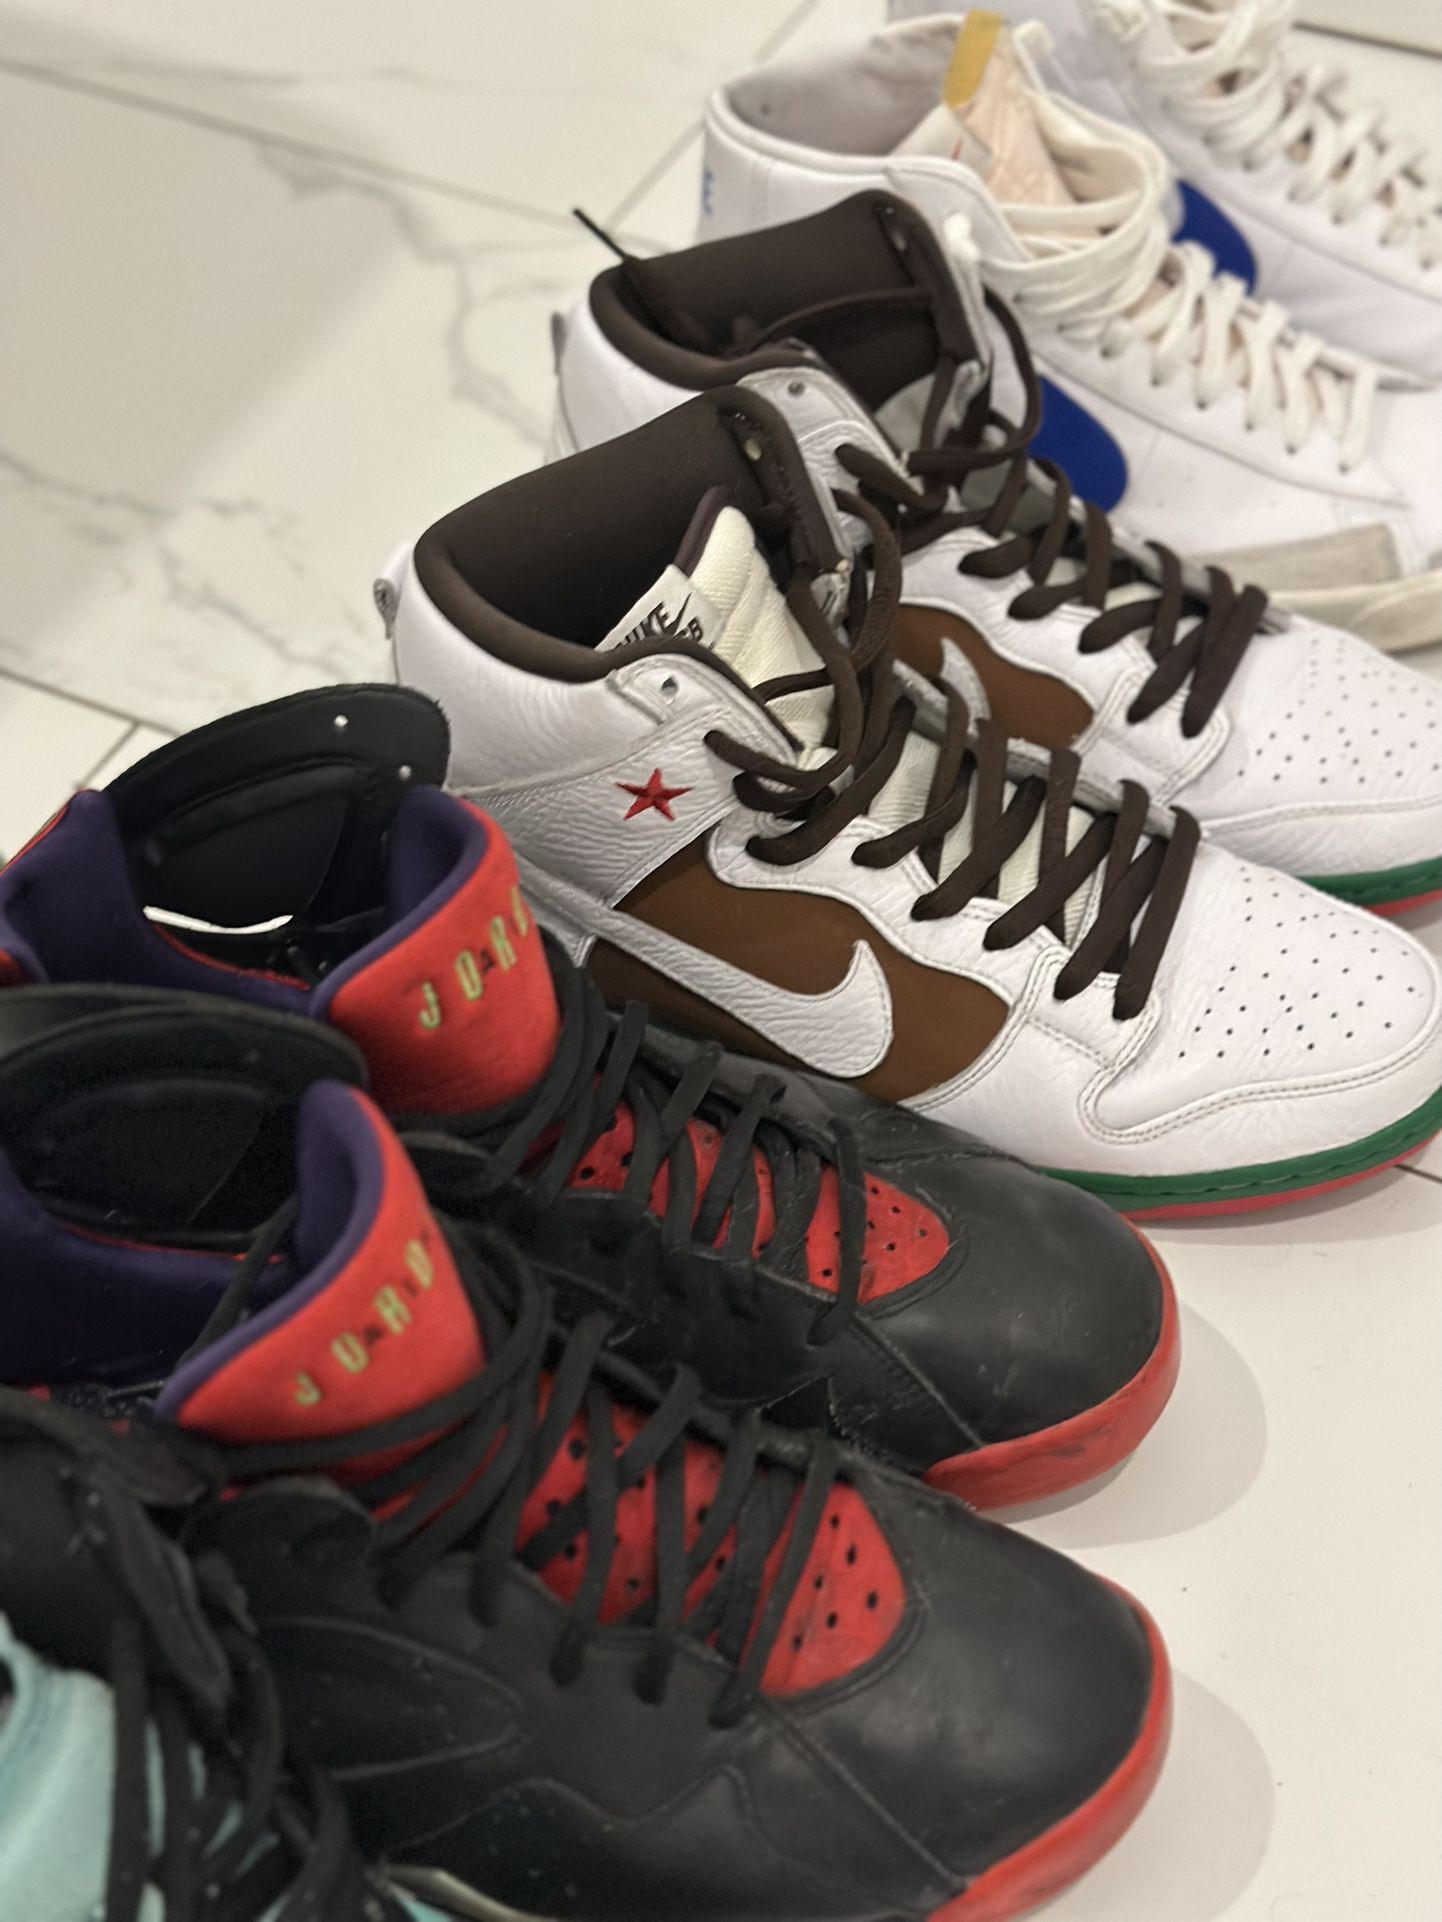 Shoes - Size 11 - Jordan, Nike, Dunks, Kim Jones for Sale in New York, NY -  OfferUp